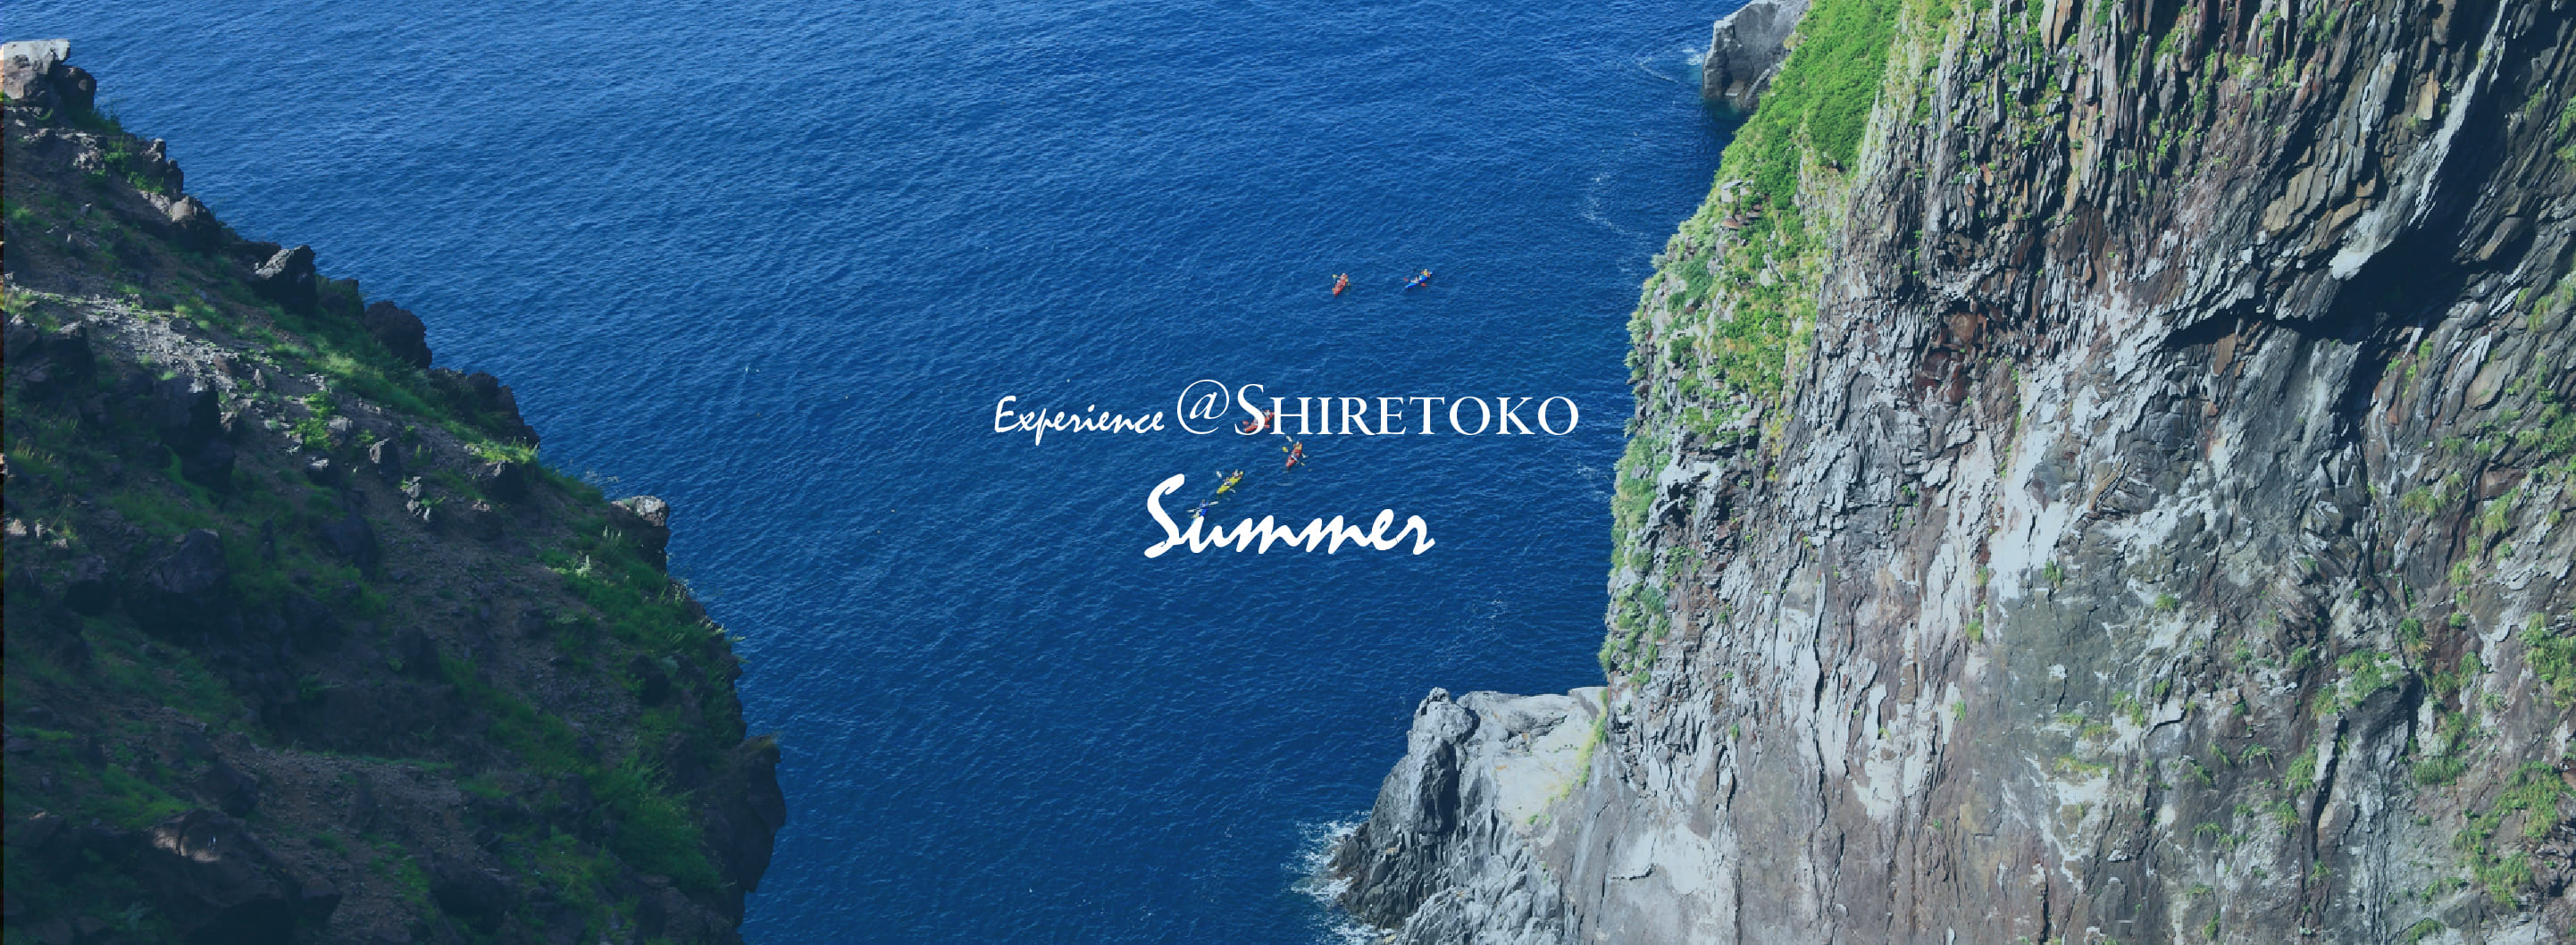 Experience@Shiretoko Summer